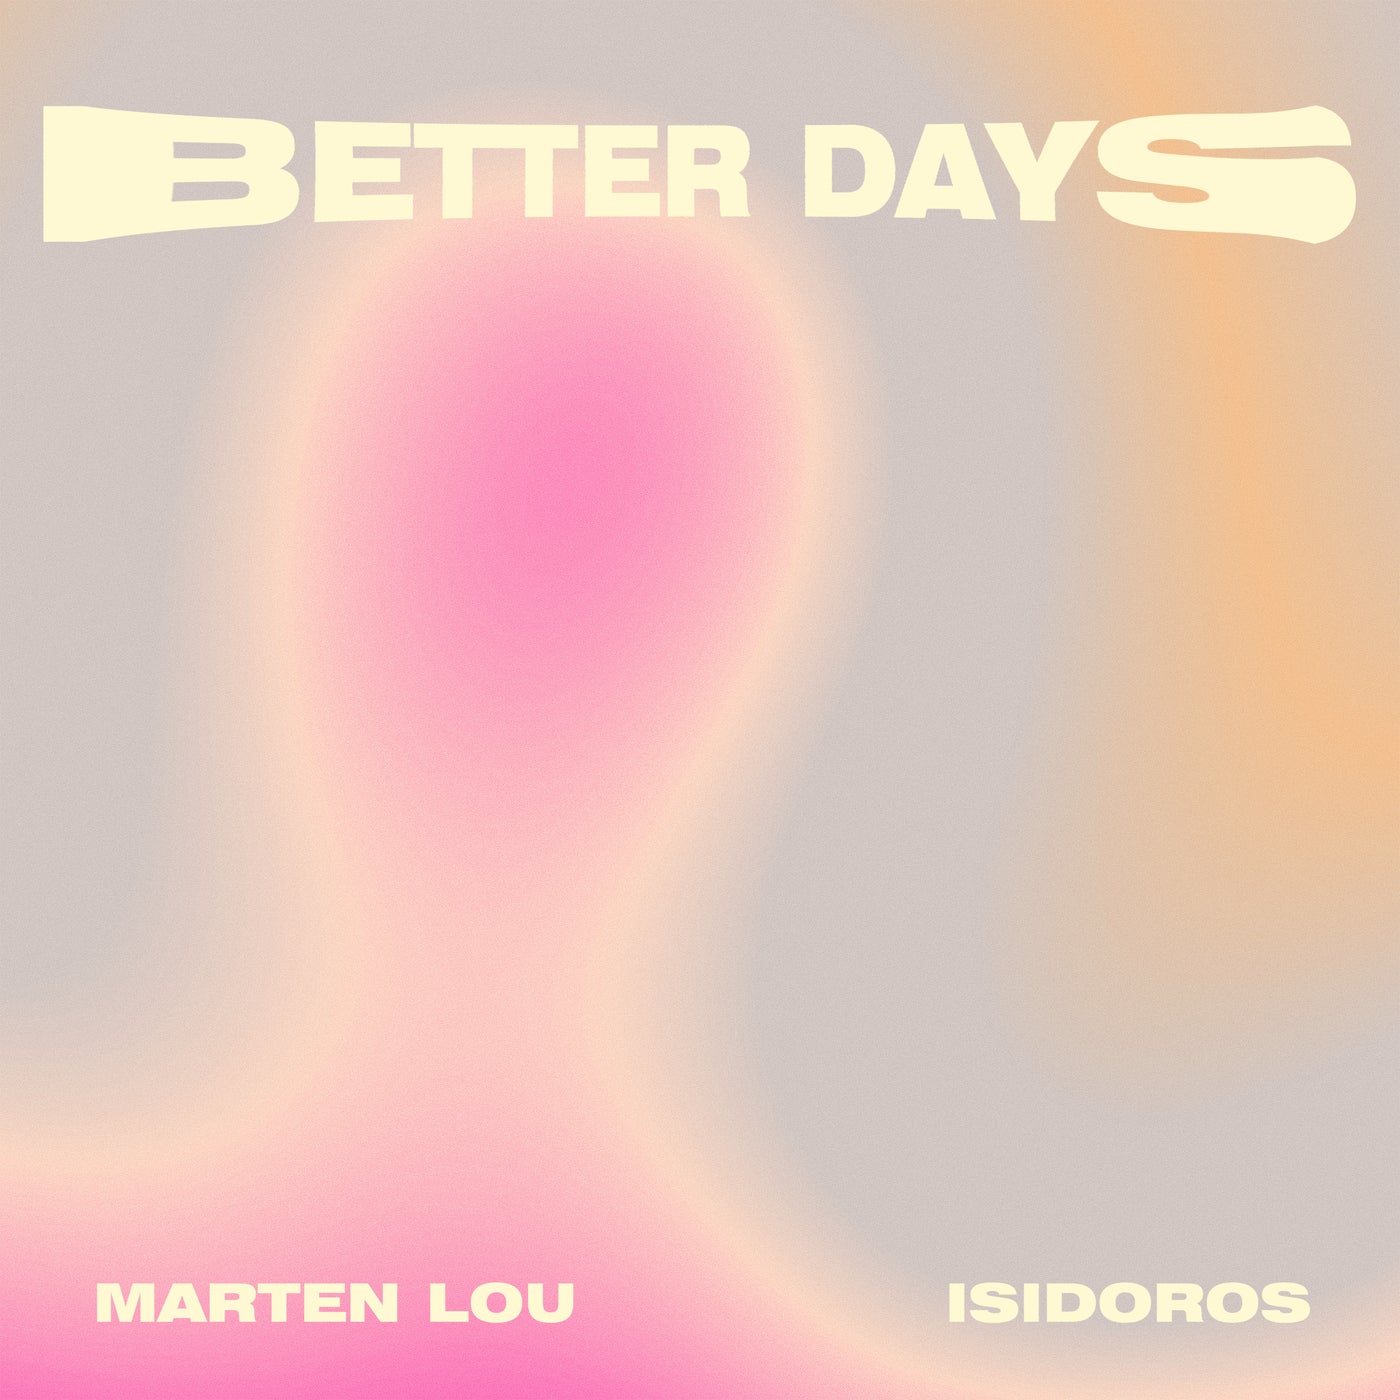 Isidoros & Marten Lou - Better Days (Extended) on SDM / Warner Music Central Europe